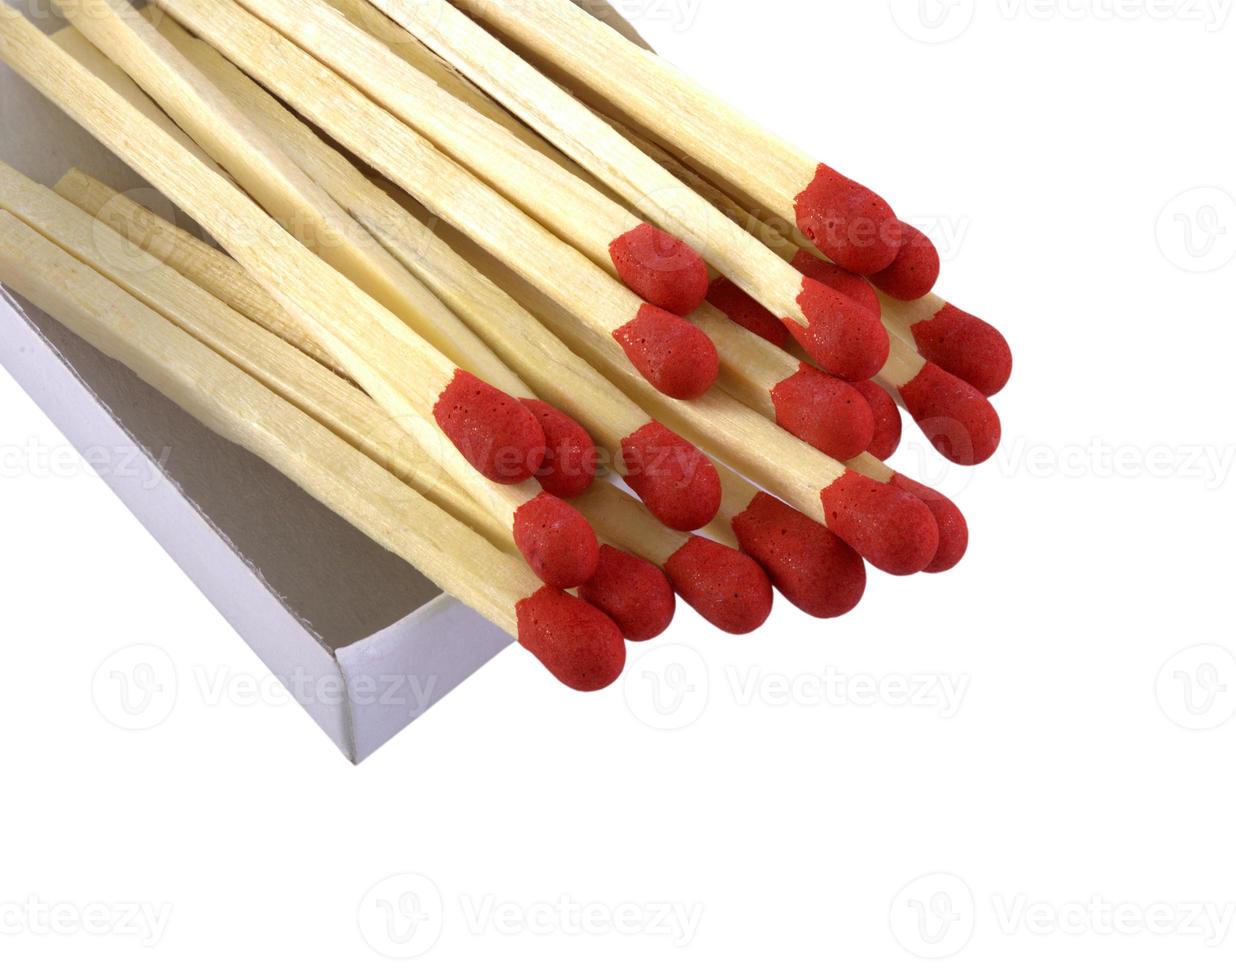 wooden matches on white photo